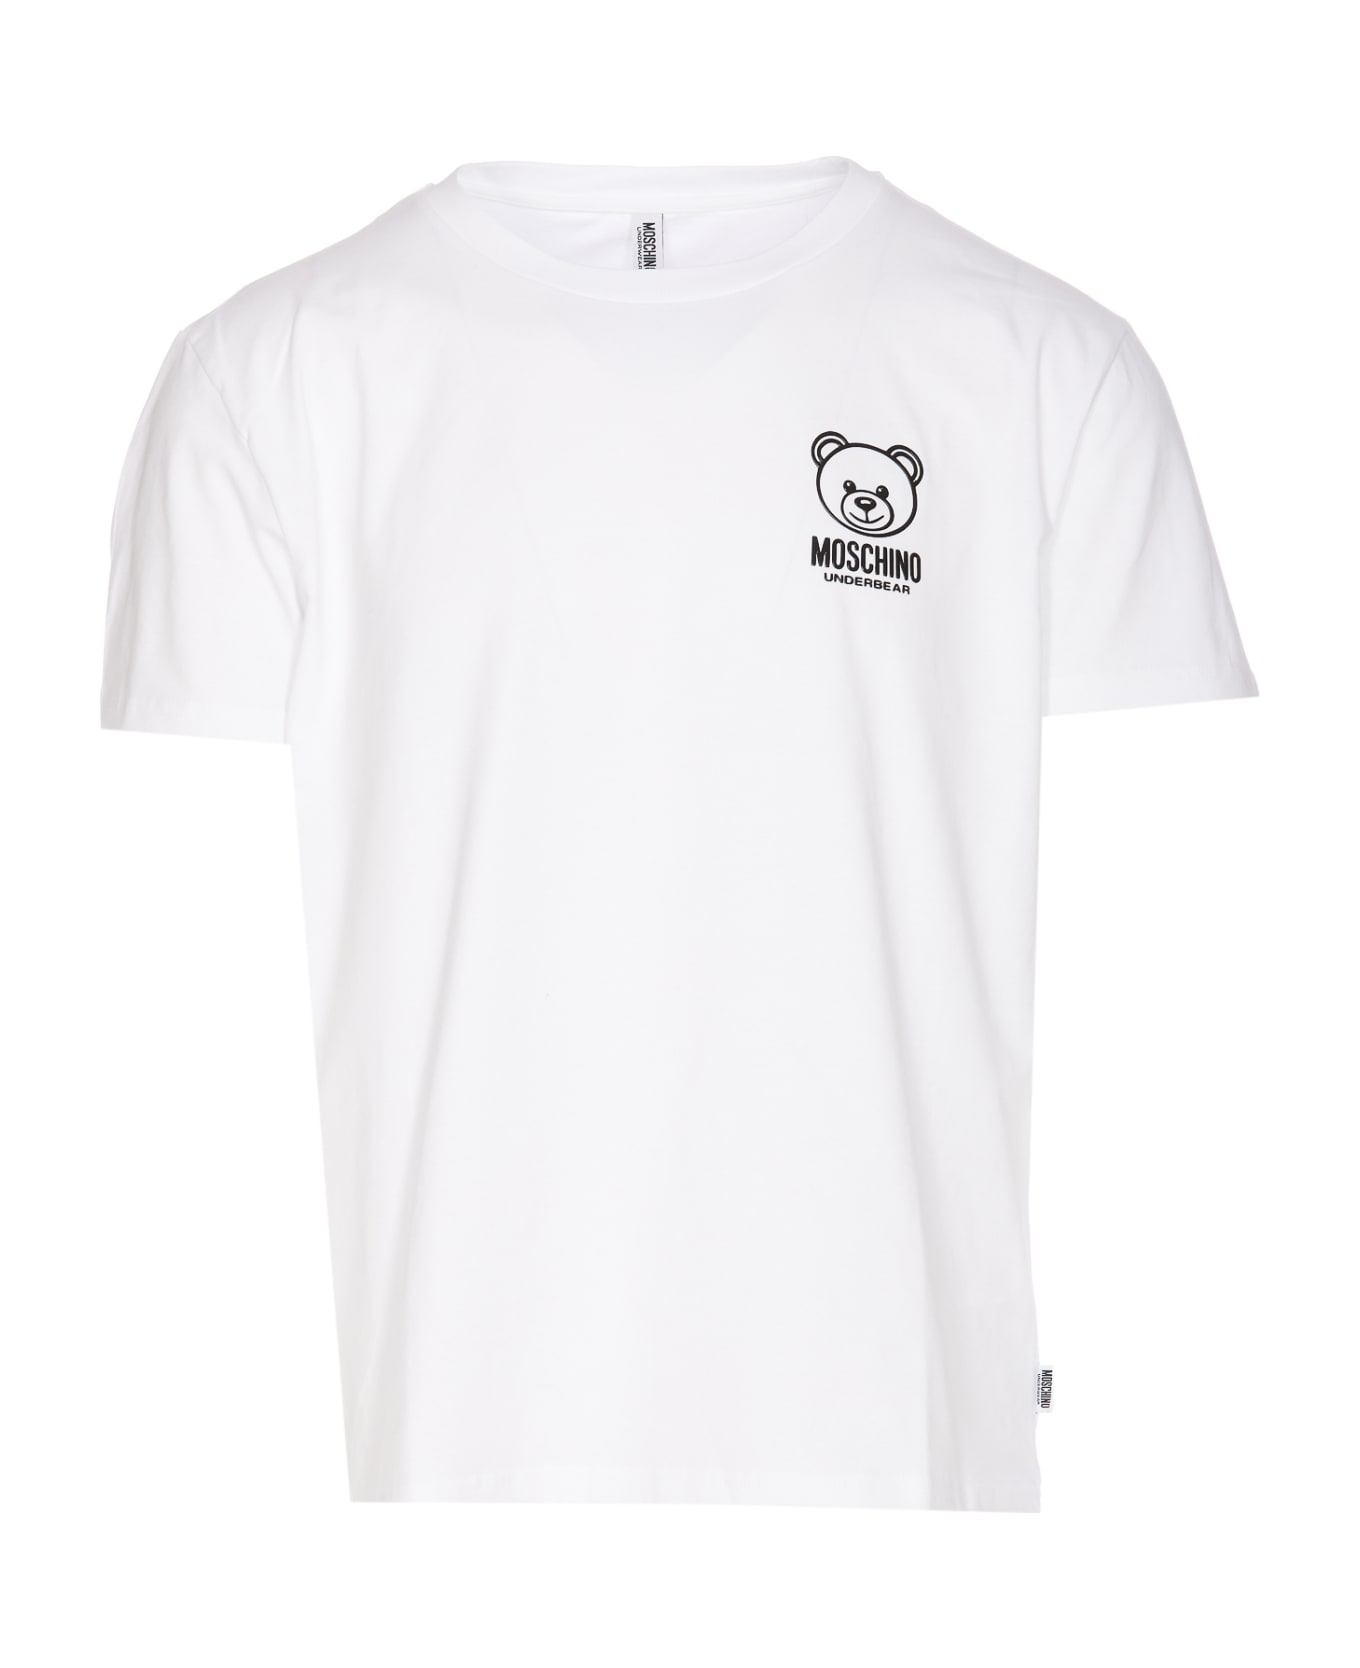 Moschino T-shirt Logo Underbear - White